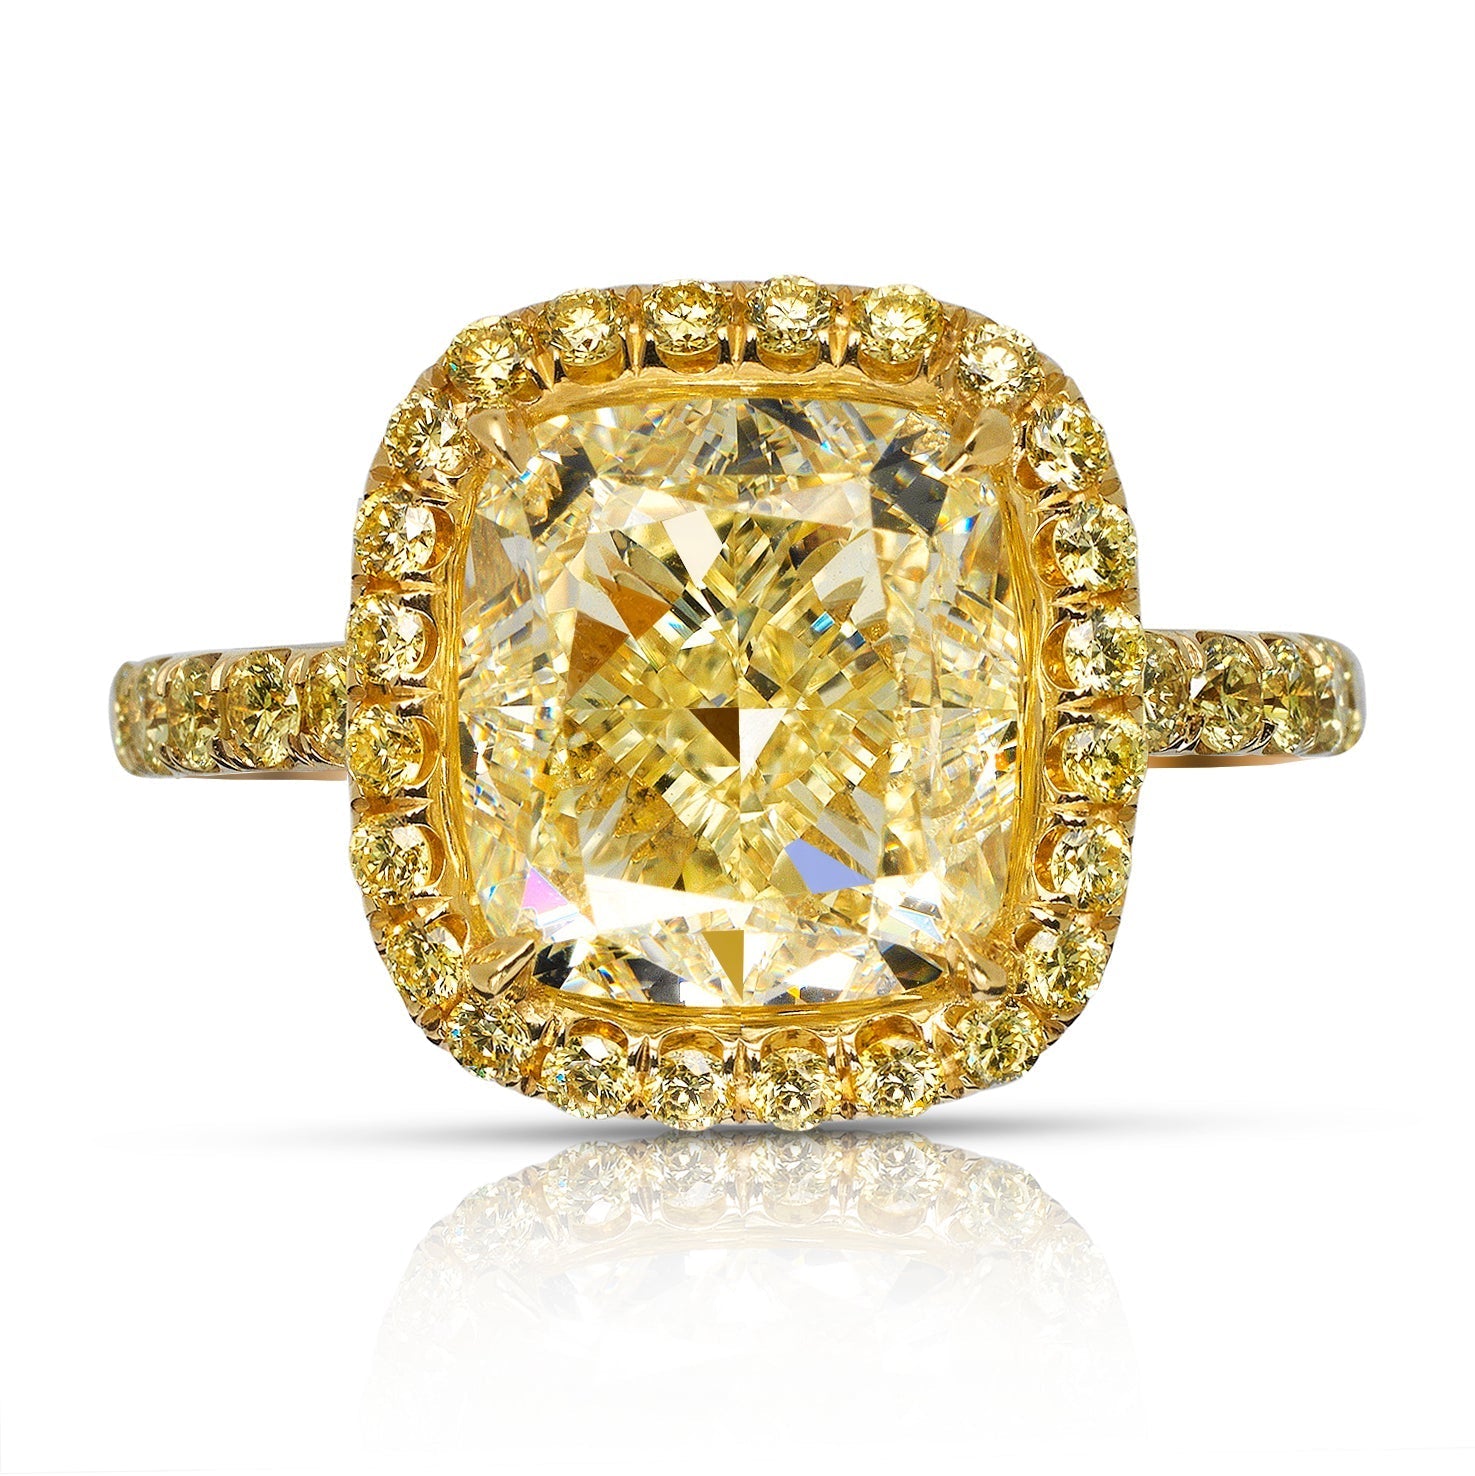 Yellow Diamond Ring Cushion Cut 6 Carat Sidestone Ring in 18K Yellow Gold  Front View